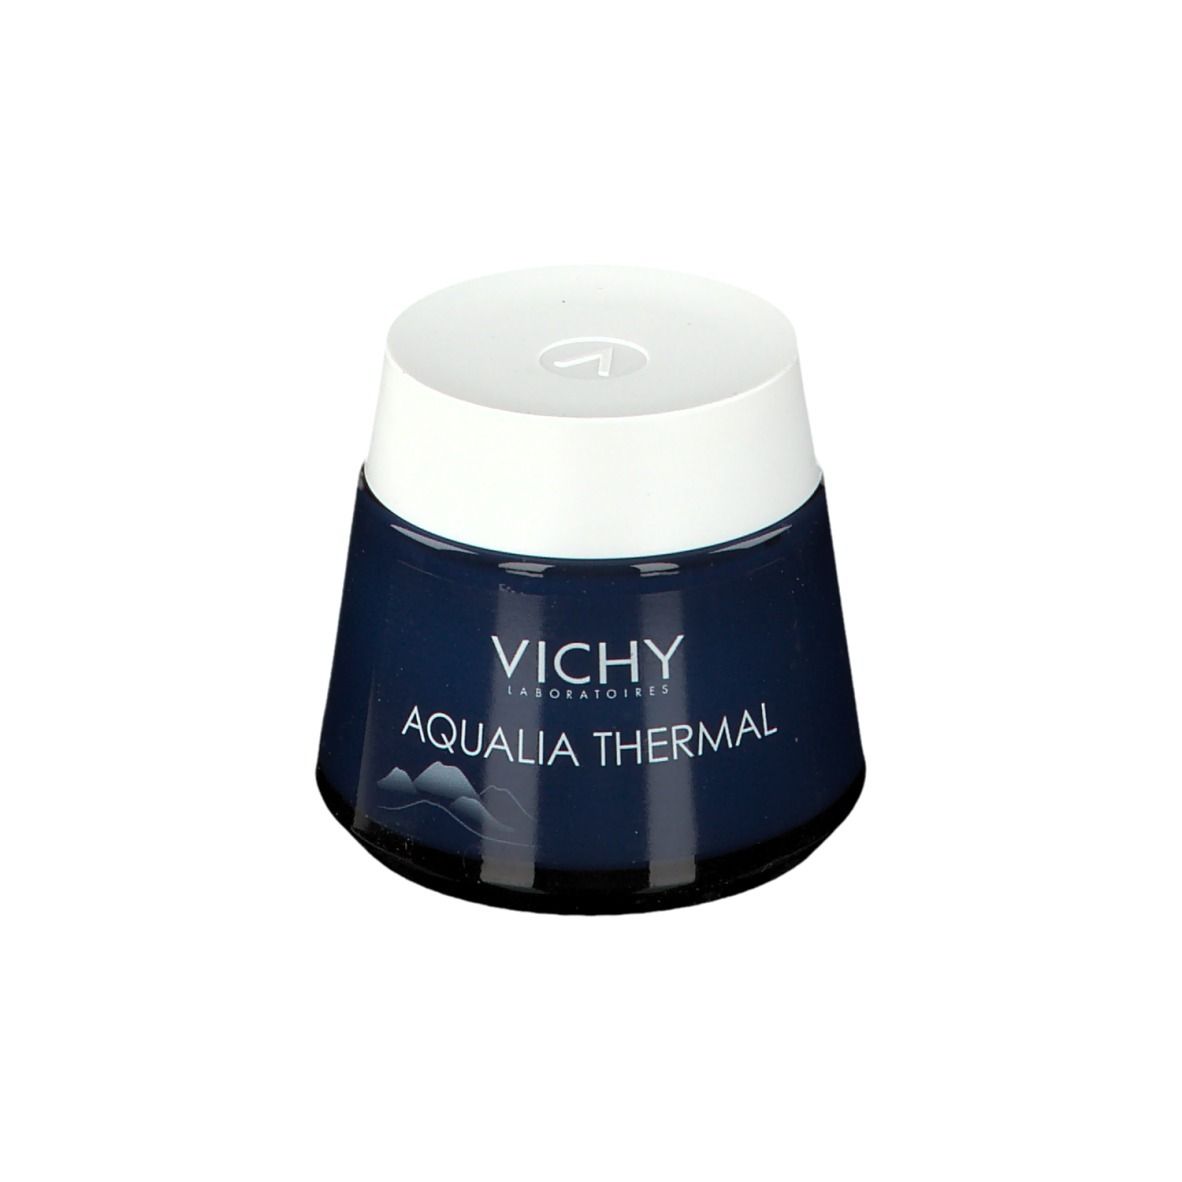 Vichy Aqualia Thermal soin de nuit effet spa 75ml